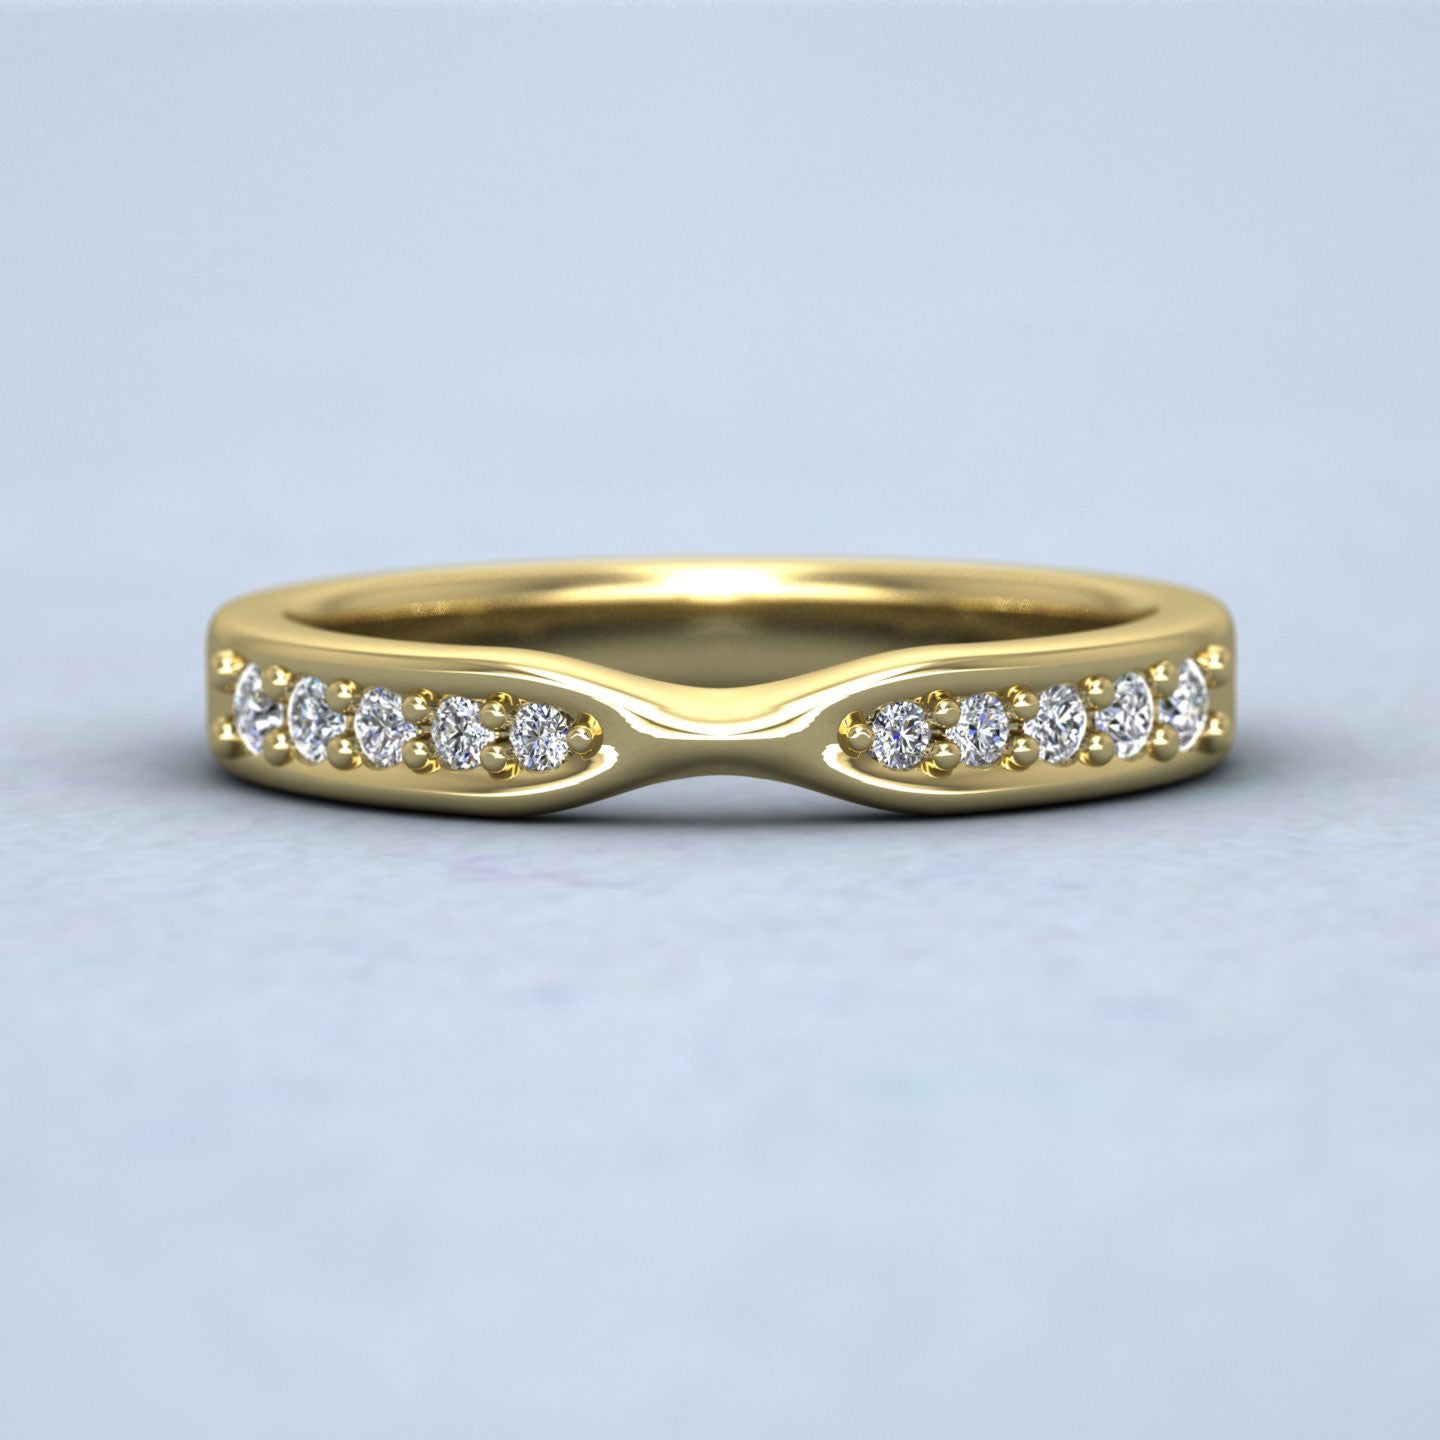 Pinch Design Wedding Ring With Diamonds 22ct Yellow Gold 3mm Wedding Ring